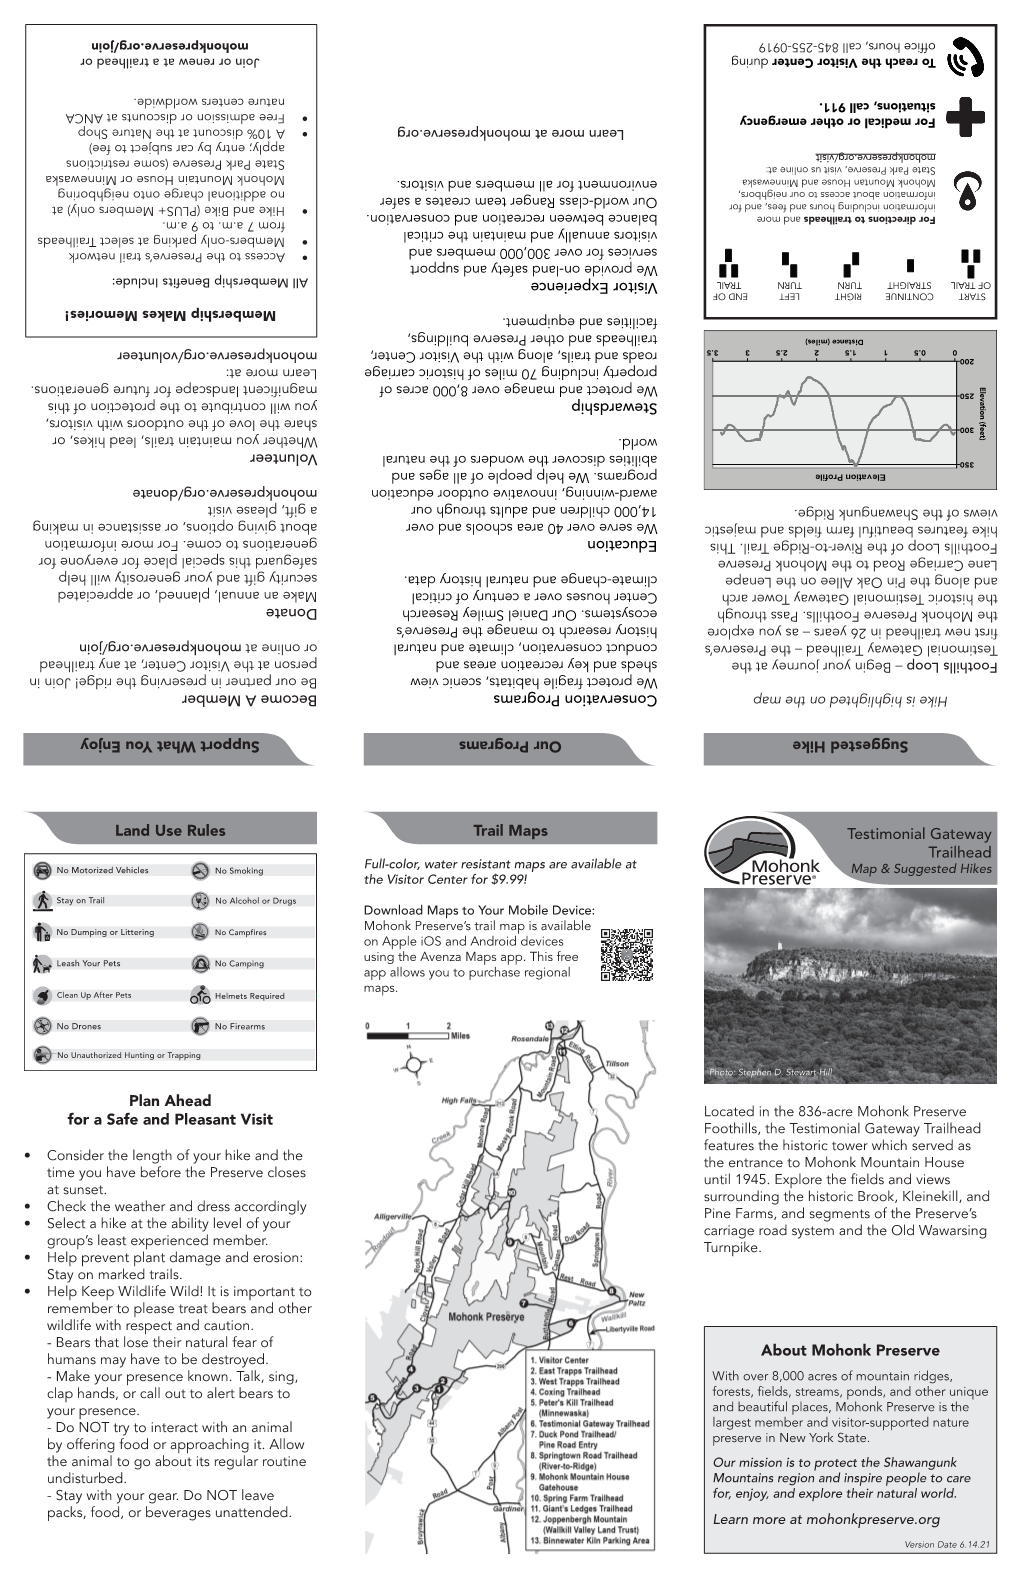 View and Download a Foothills Loop Printable PDF